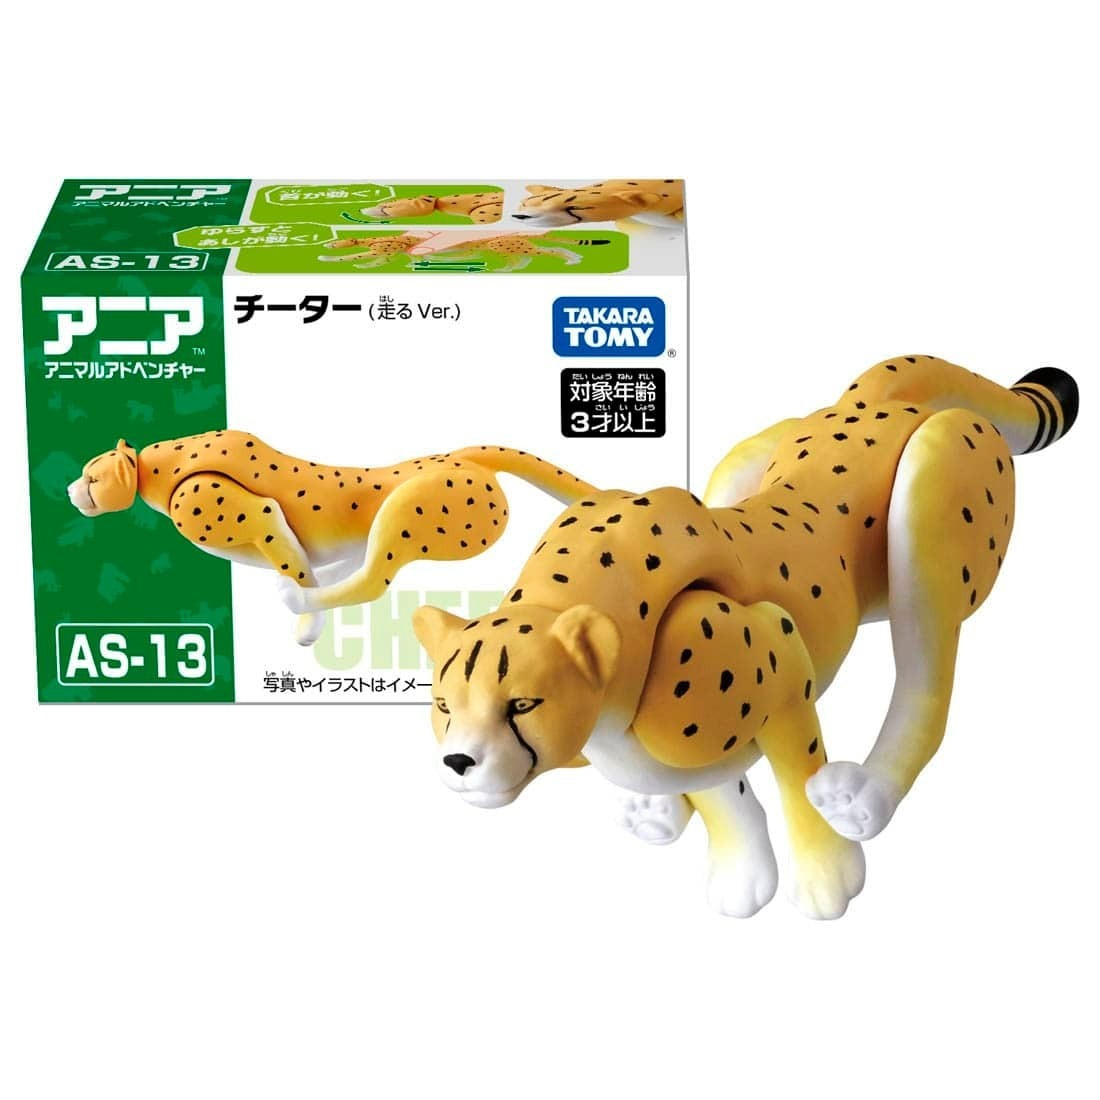 Takara Tomy Ania 動物系列AS-13 獵豹Cheetah (Running Ver.)